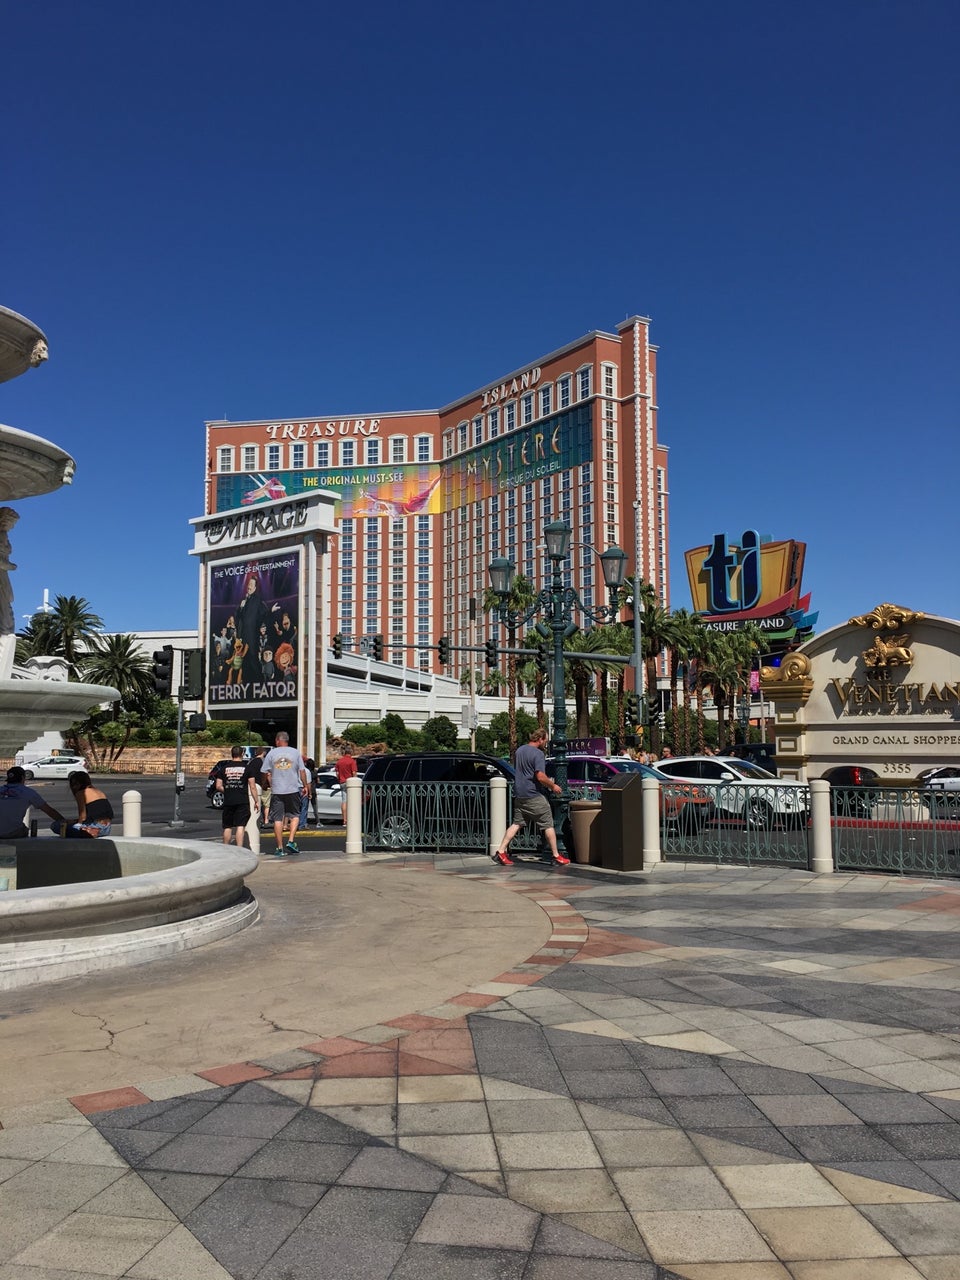 Mystère by Cirque du Soleil at Treasure Island Hotel & Casino 2023 - Las  Vegas